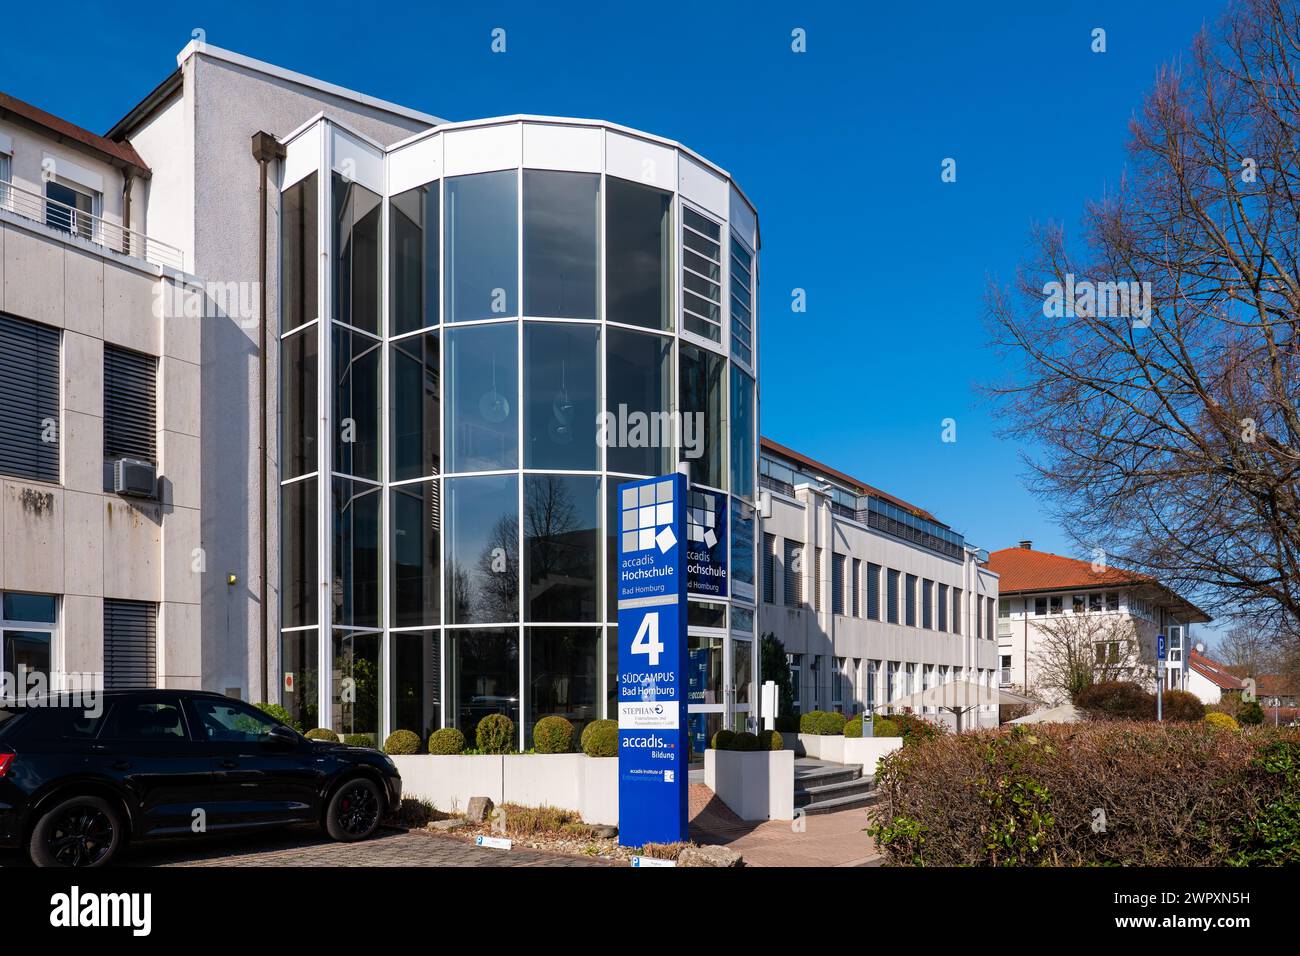 Bad Homburg, Deutschland, 03-2024: Accadis University, South Campus, Bad Homburg - Accadis Hochschule, Südcampus Stockfoto